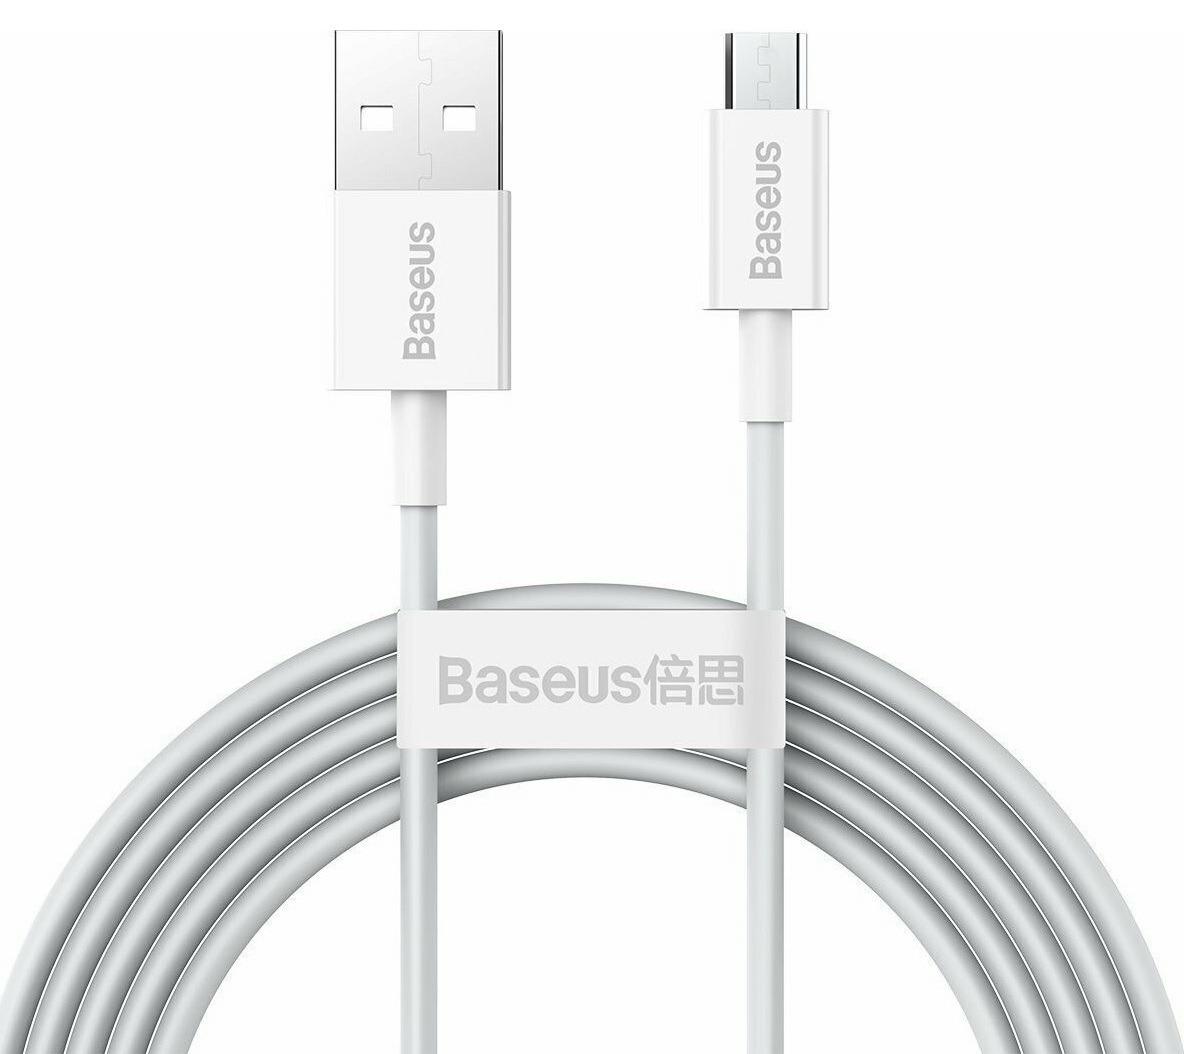 Cablu alimentare si date Baseus Superior, Fast Charging Data Cable pt. smartphone, USB la Micro-USB 2A, 2m, alb